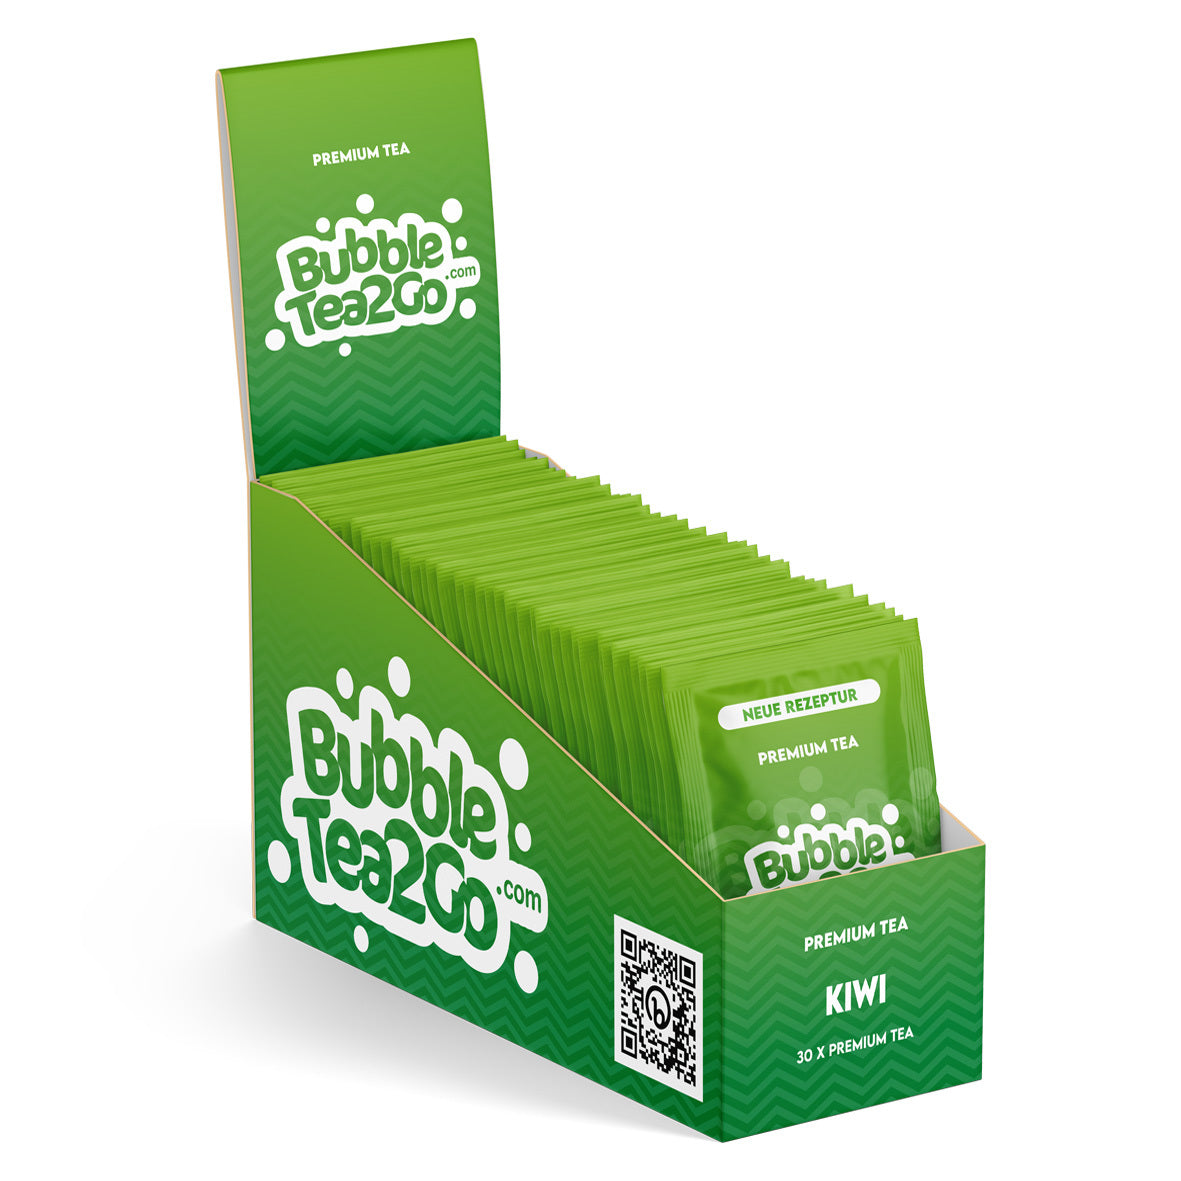 Premium tea advantage box - kiwi (30 pcs.)